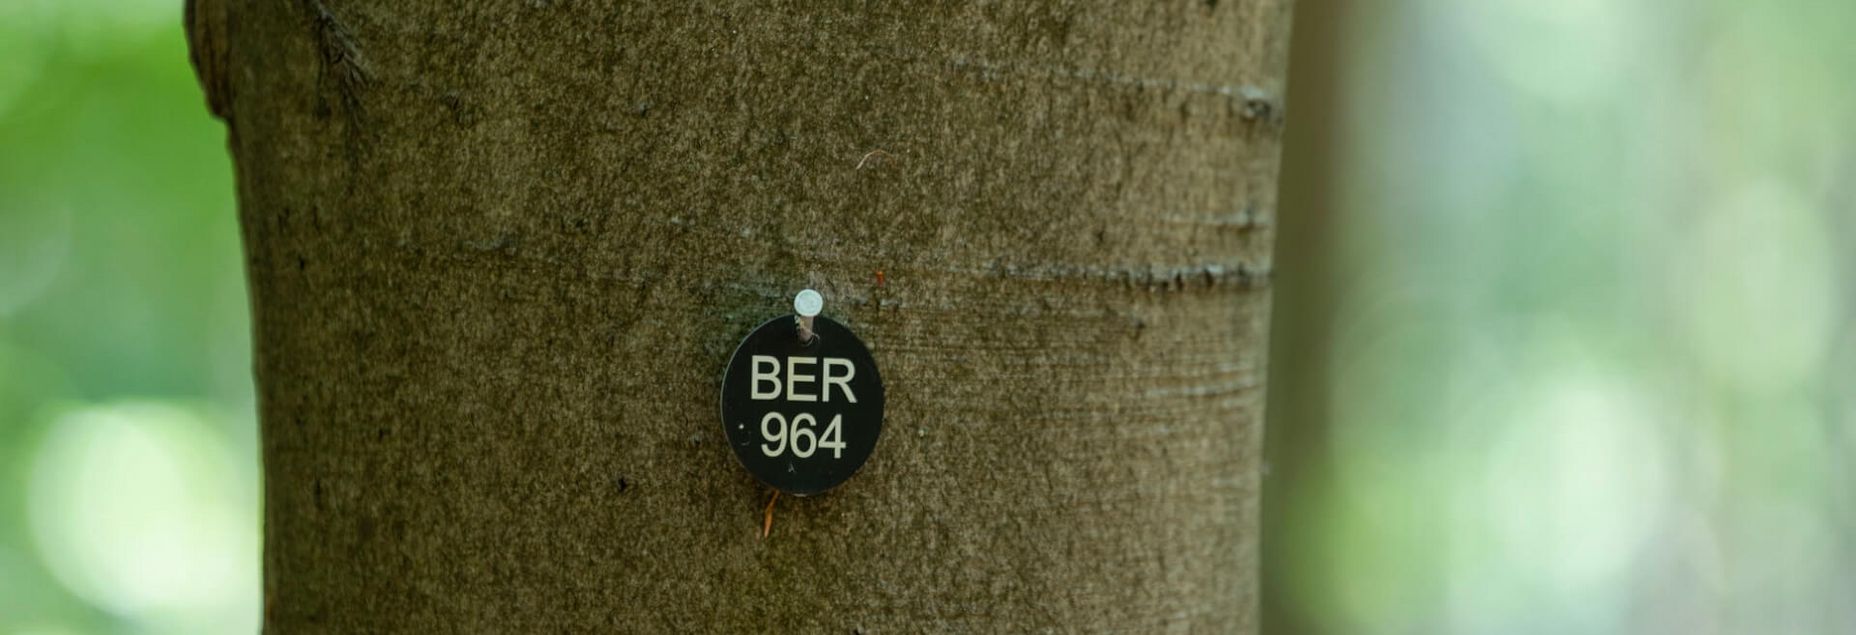 Baum BER 964 - Plakette